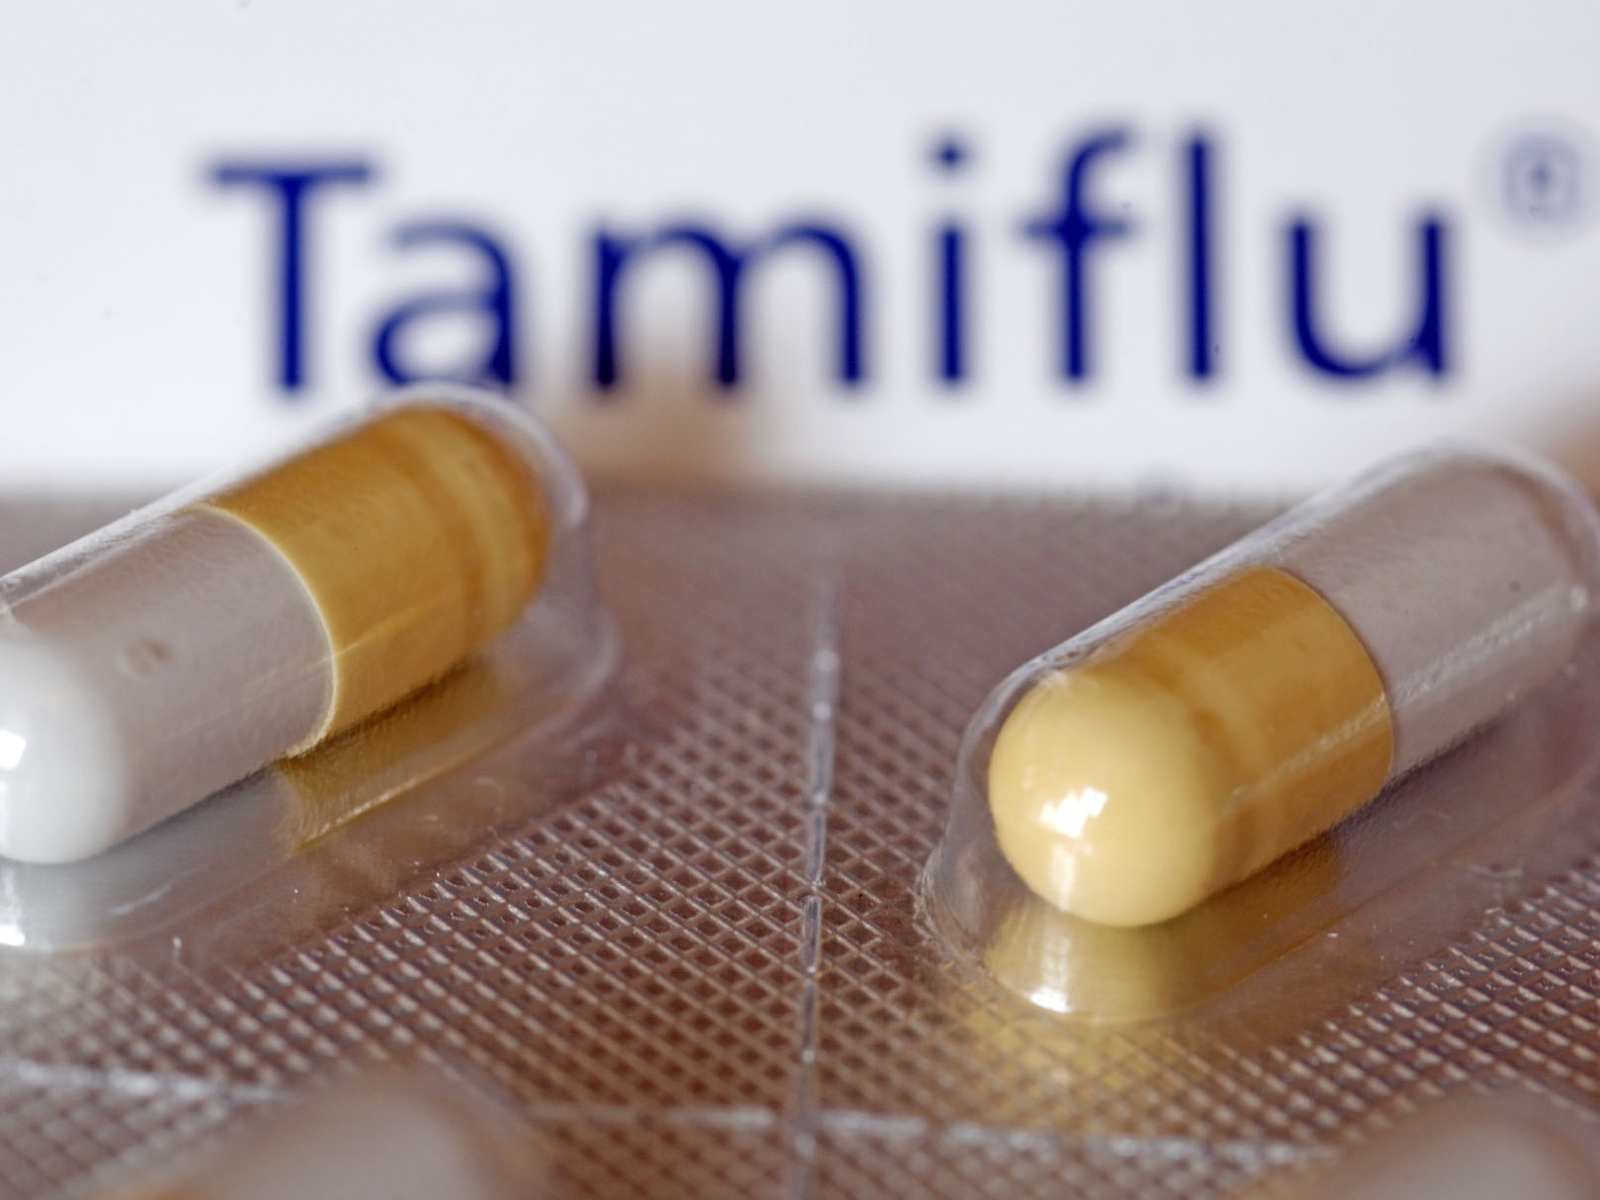 WHO insists on Tamiflu effectiveness